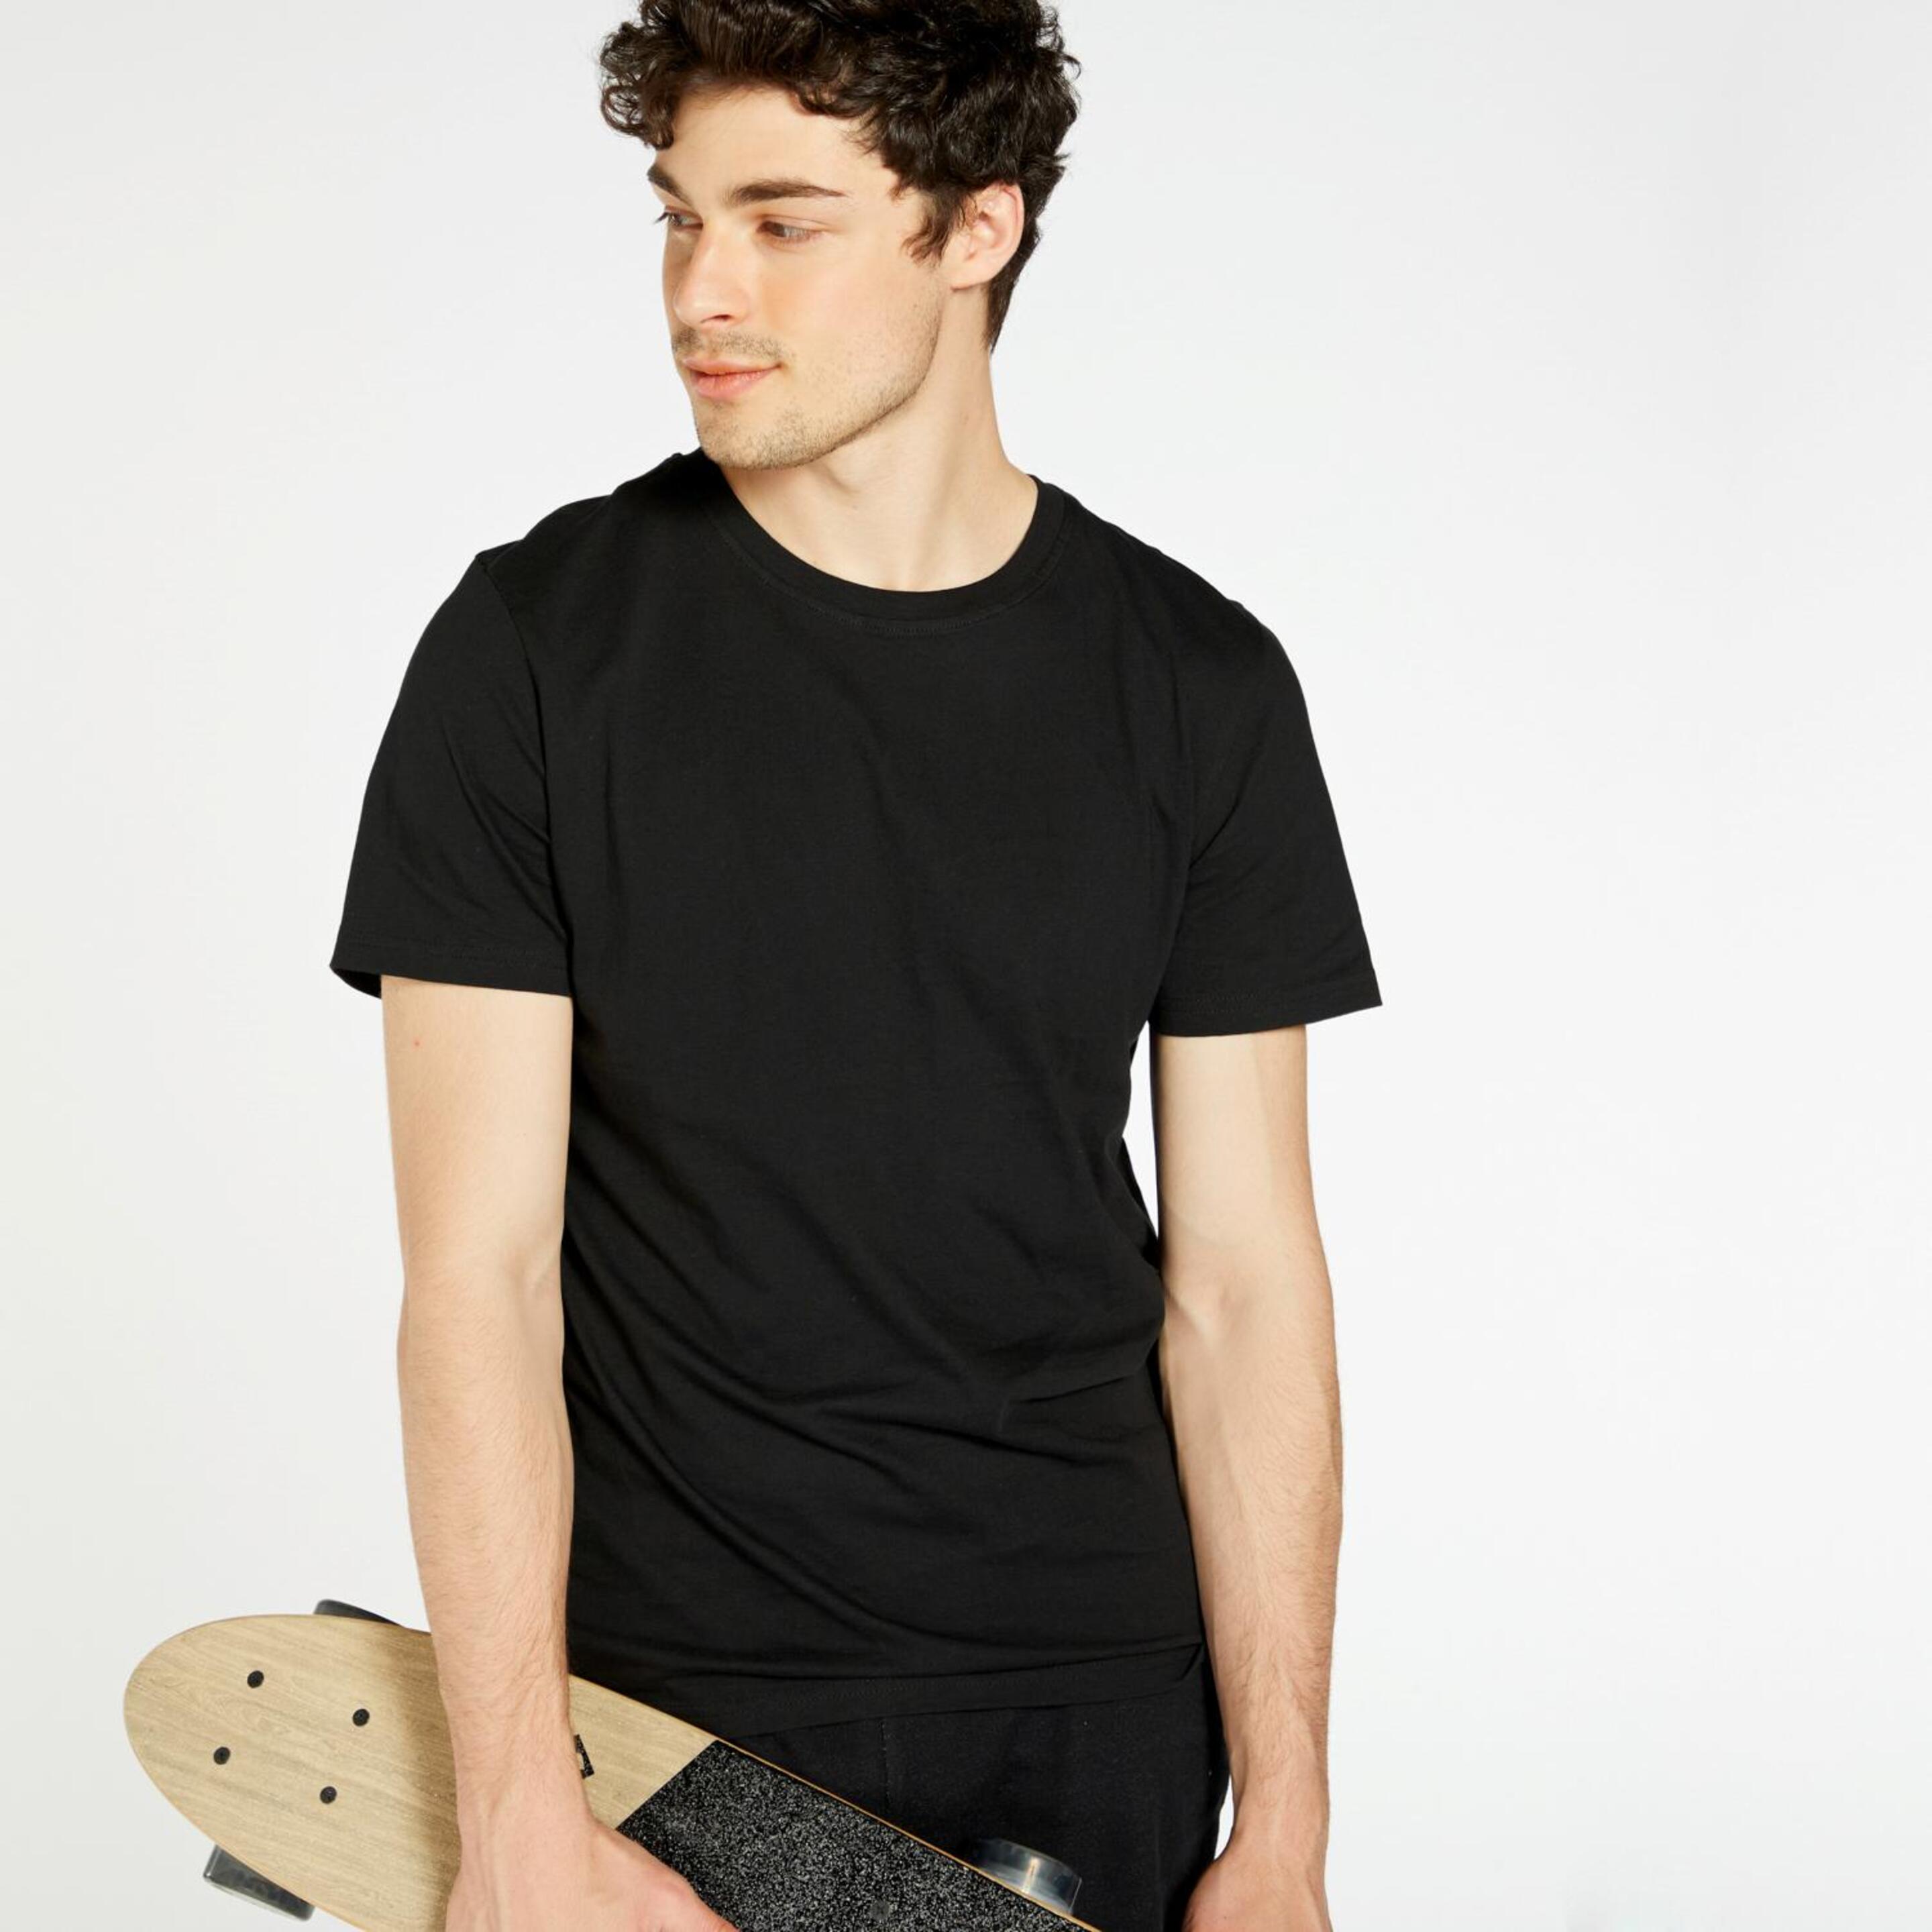 Camiseta Up - negro - Camiseta Hombre